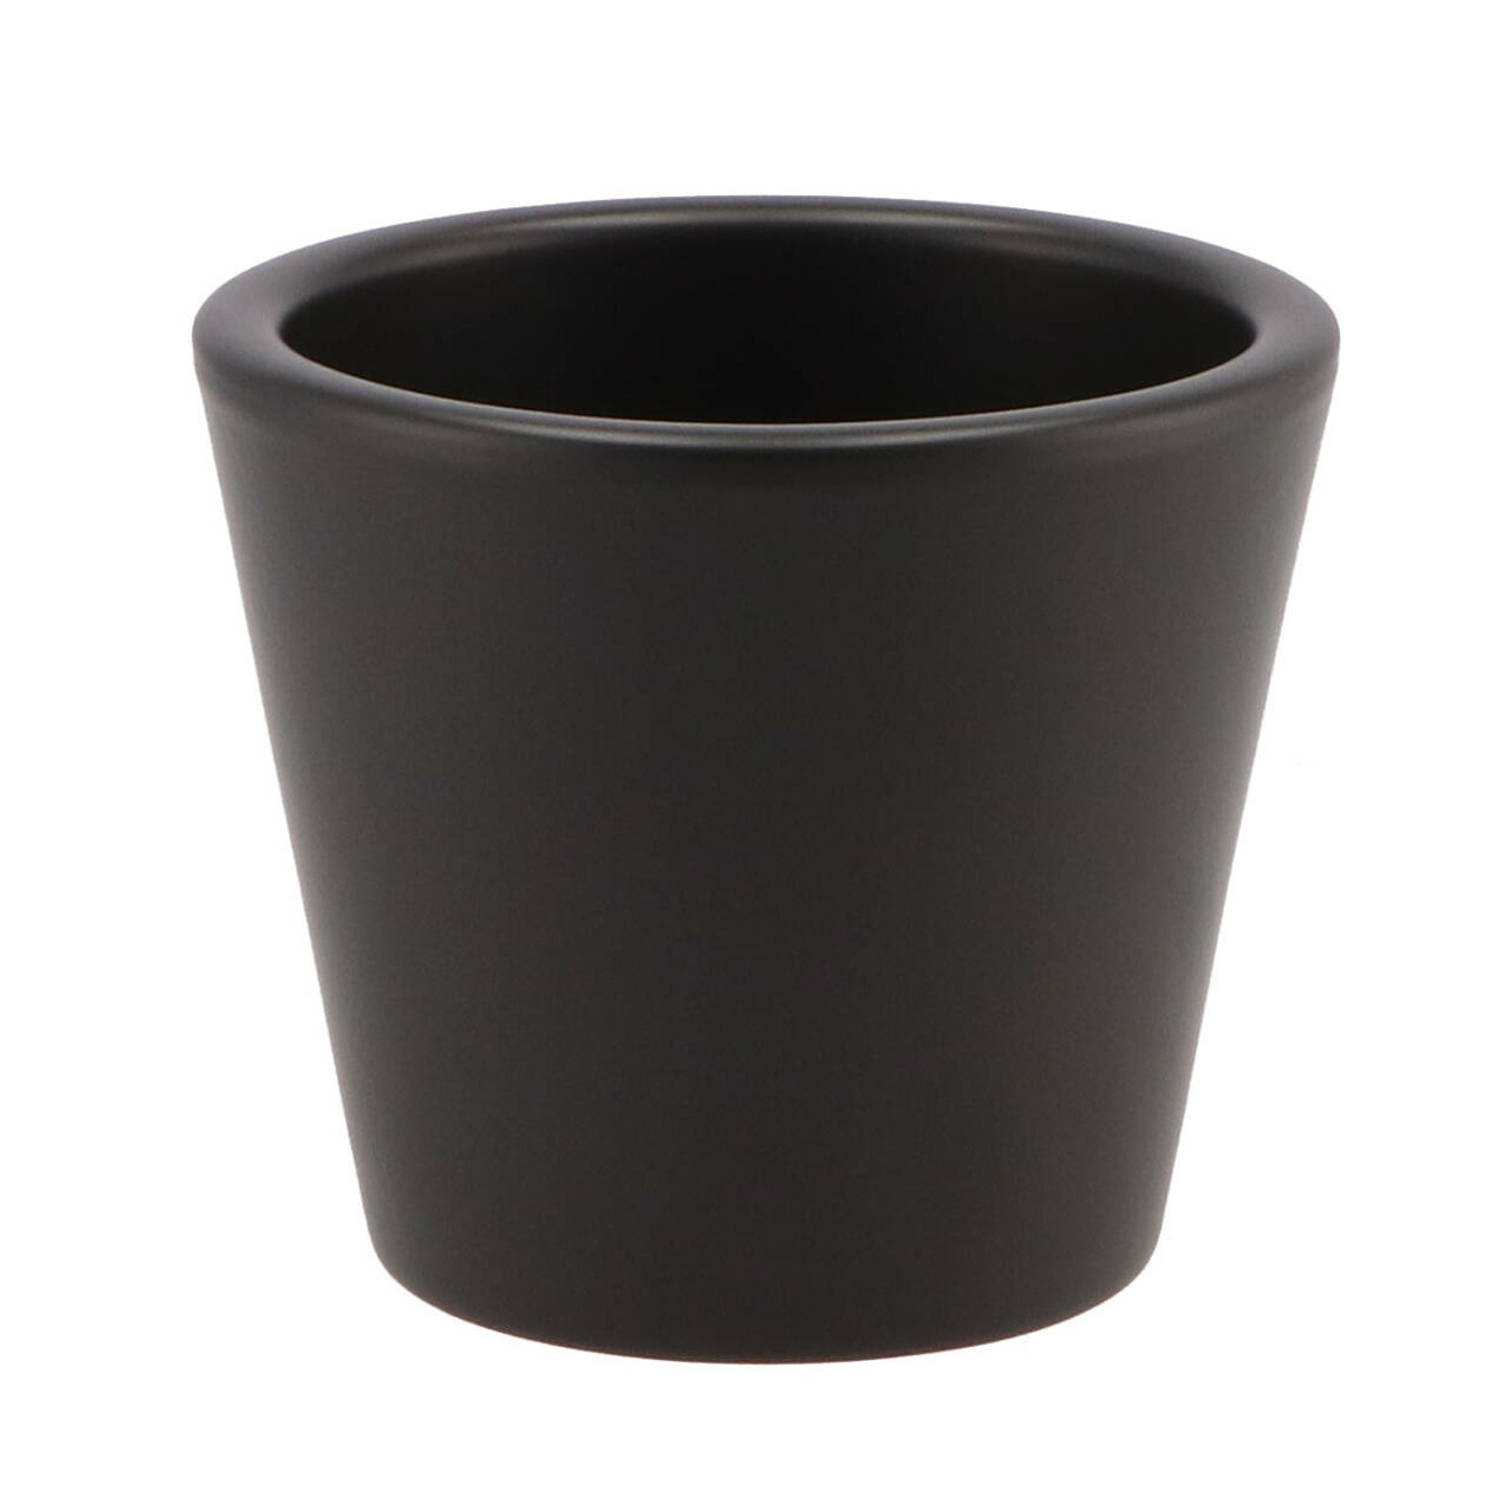 DK Design Bloempot/plantenpot - Vinci - zwart mat - voor kamerplant - D10 x H12 cm